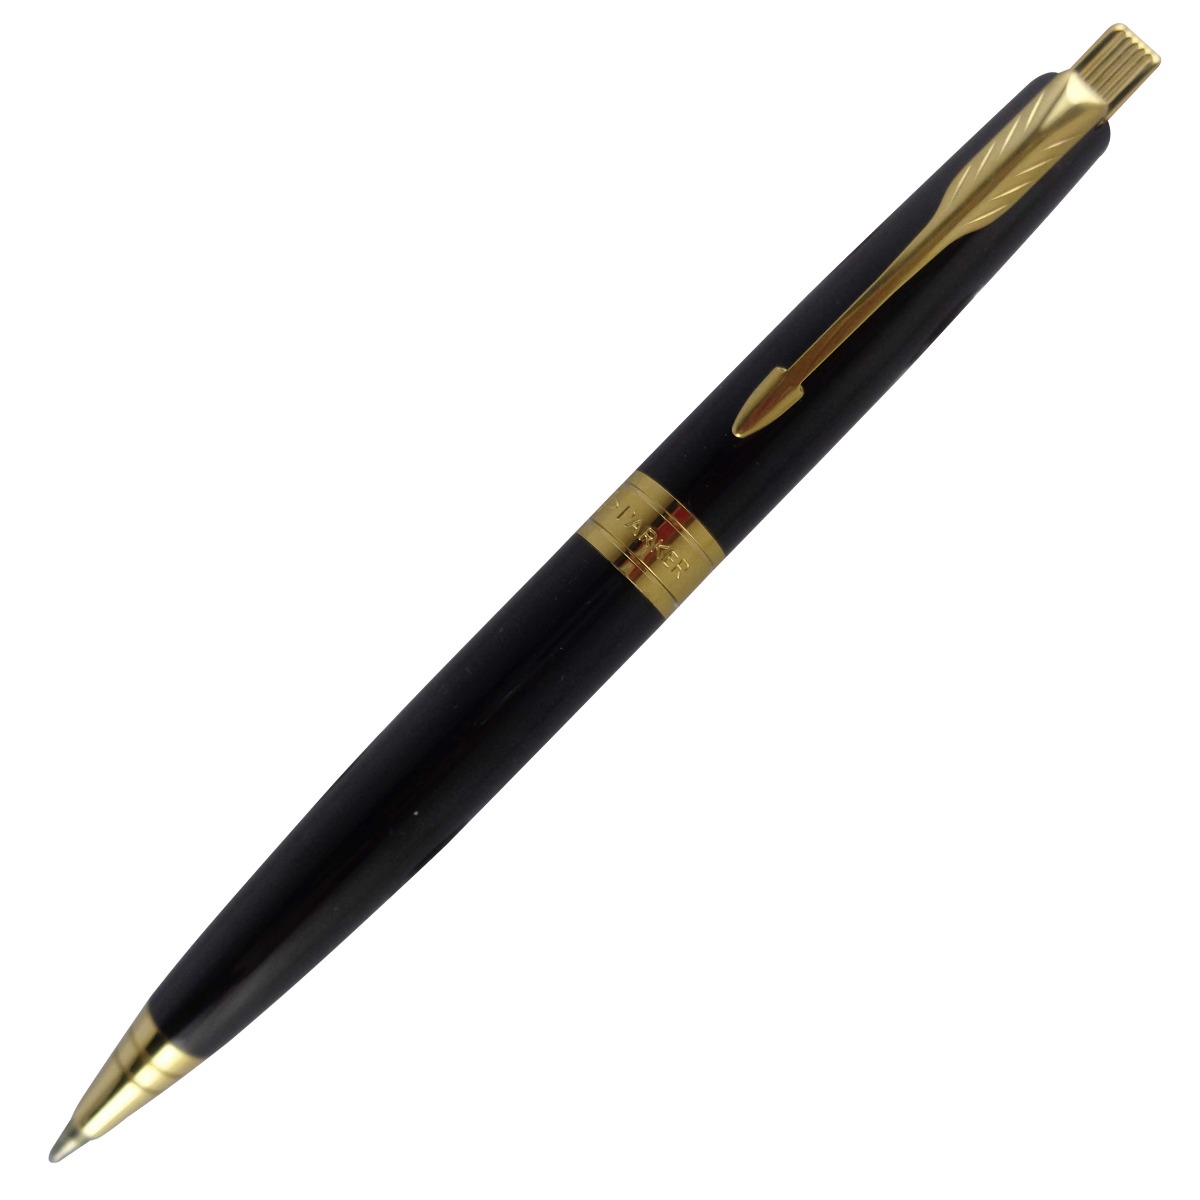 Parker Model: 14911 Aster Lacque Black color Body with golden clip medium tip retractable ball pen